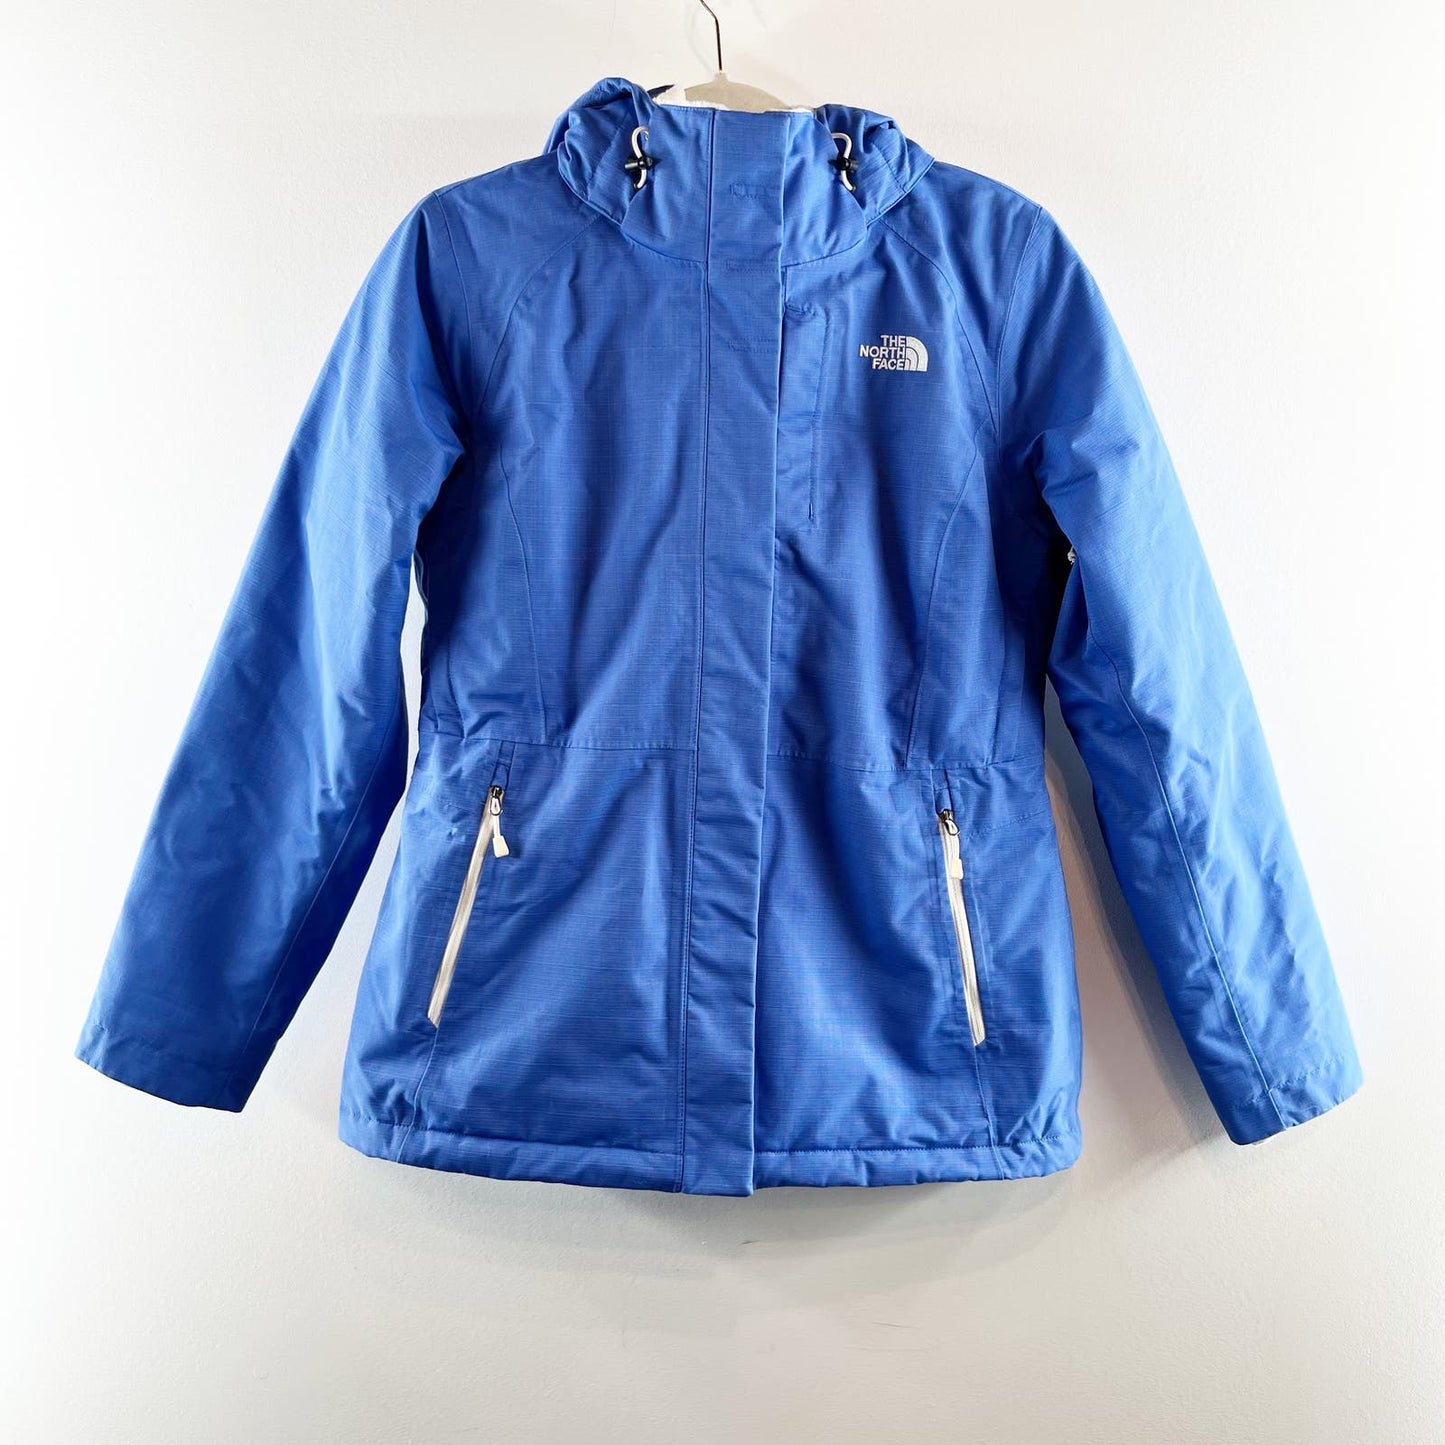 The North Face Inlux Full Zip Fleece Lined Winter Snow Coat Jacket Blue Medium